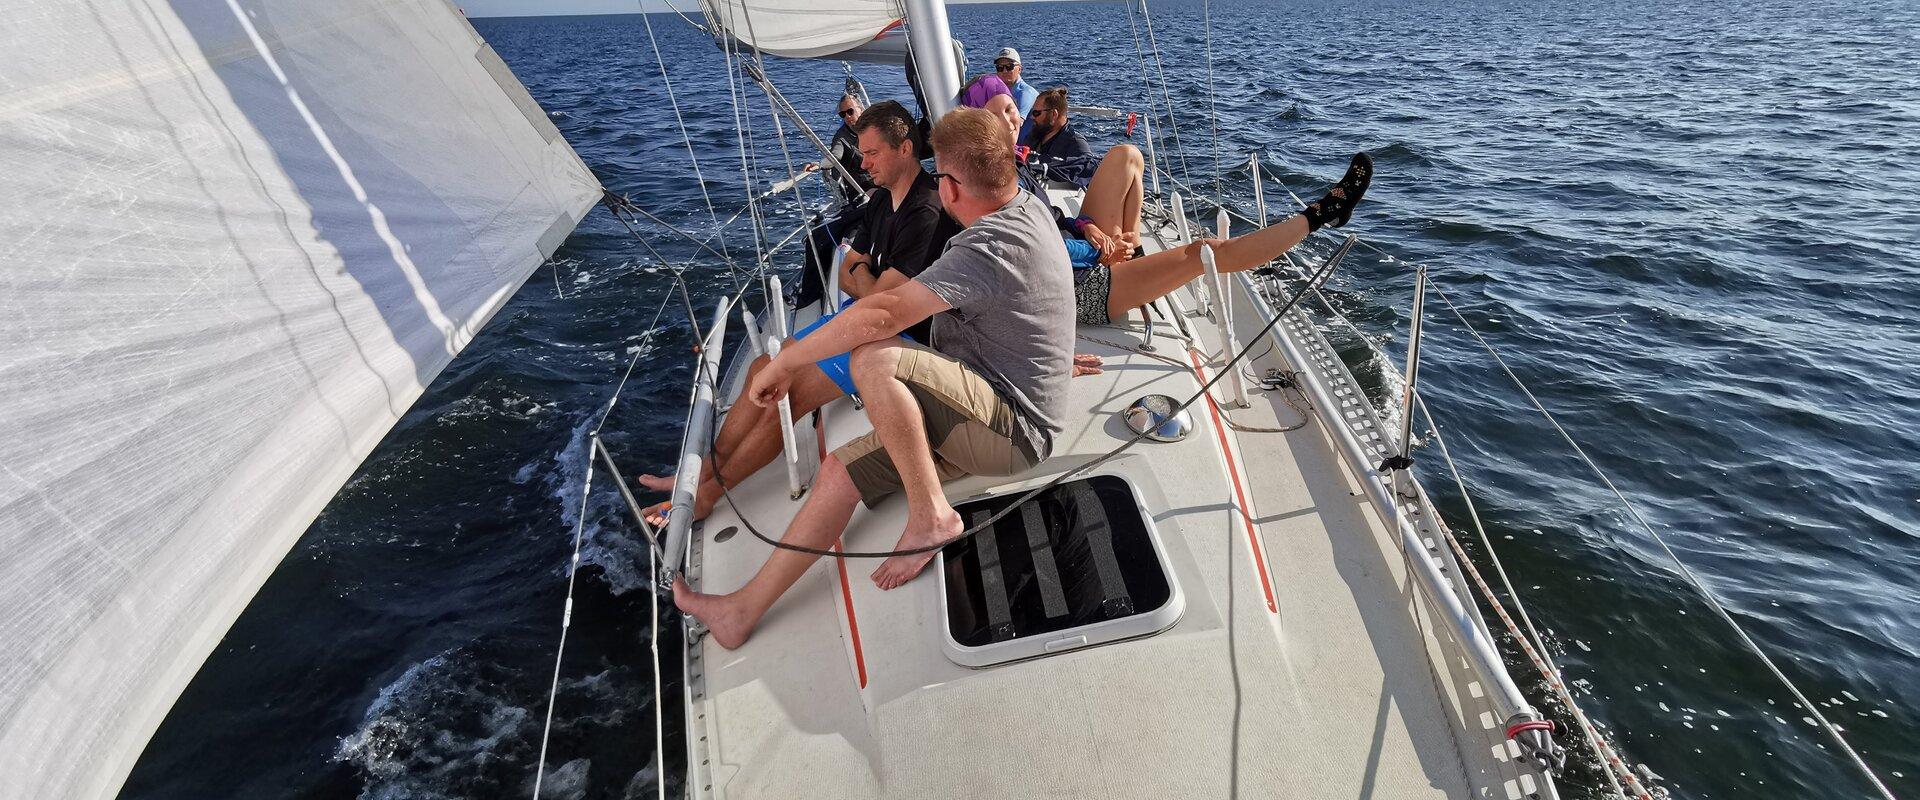 Seikle Vabaks dewberry picking trip with a sailboat to Sorgu island